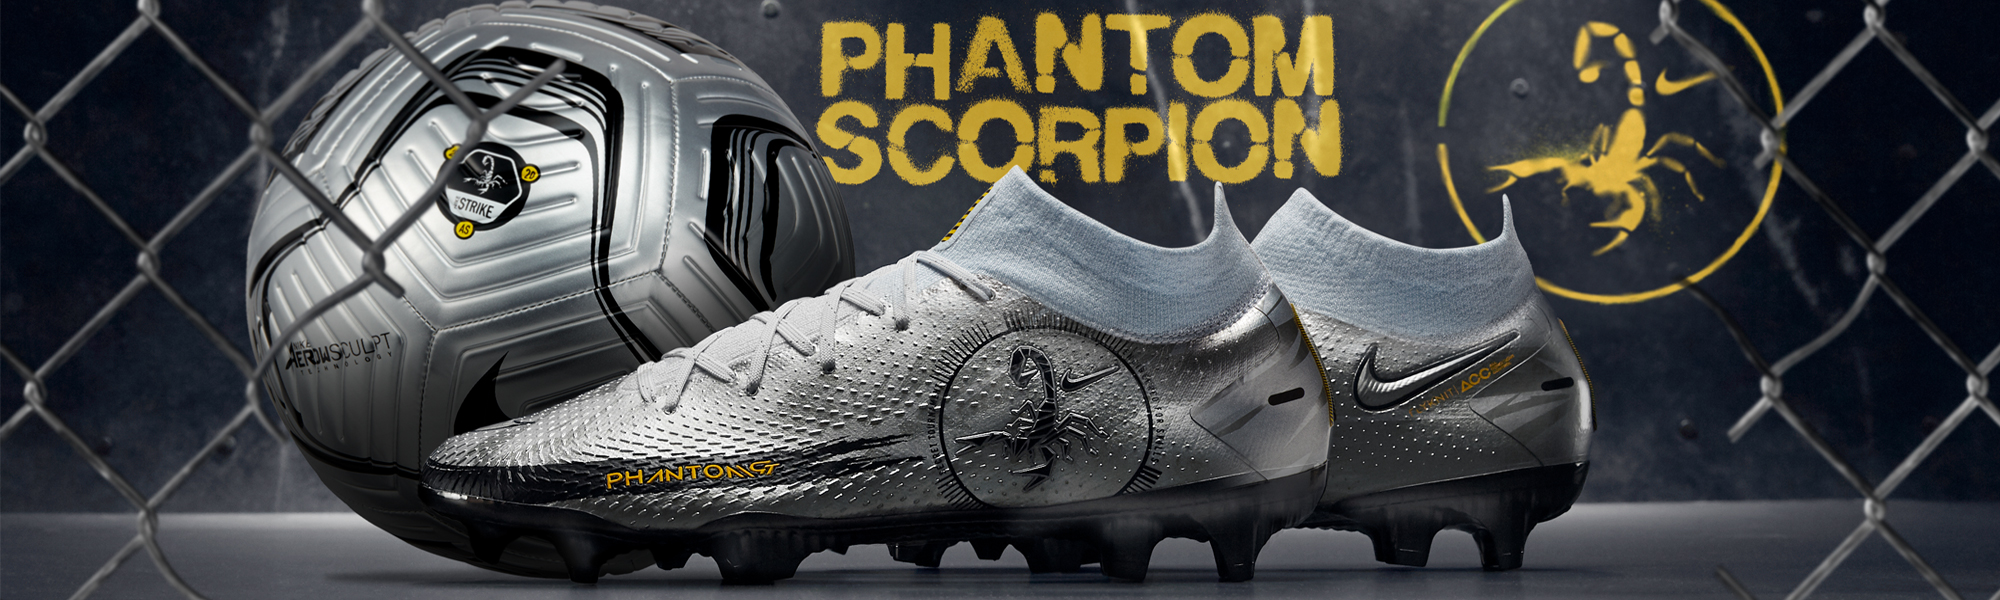 nike soccer shoes phantom